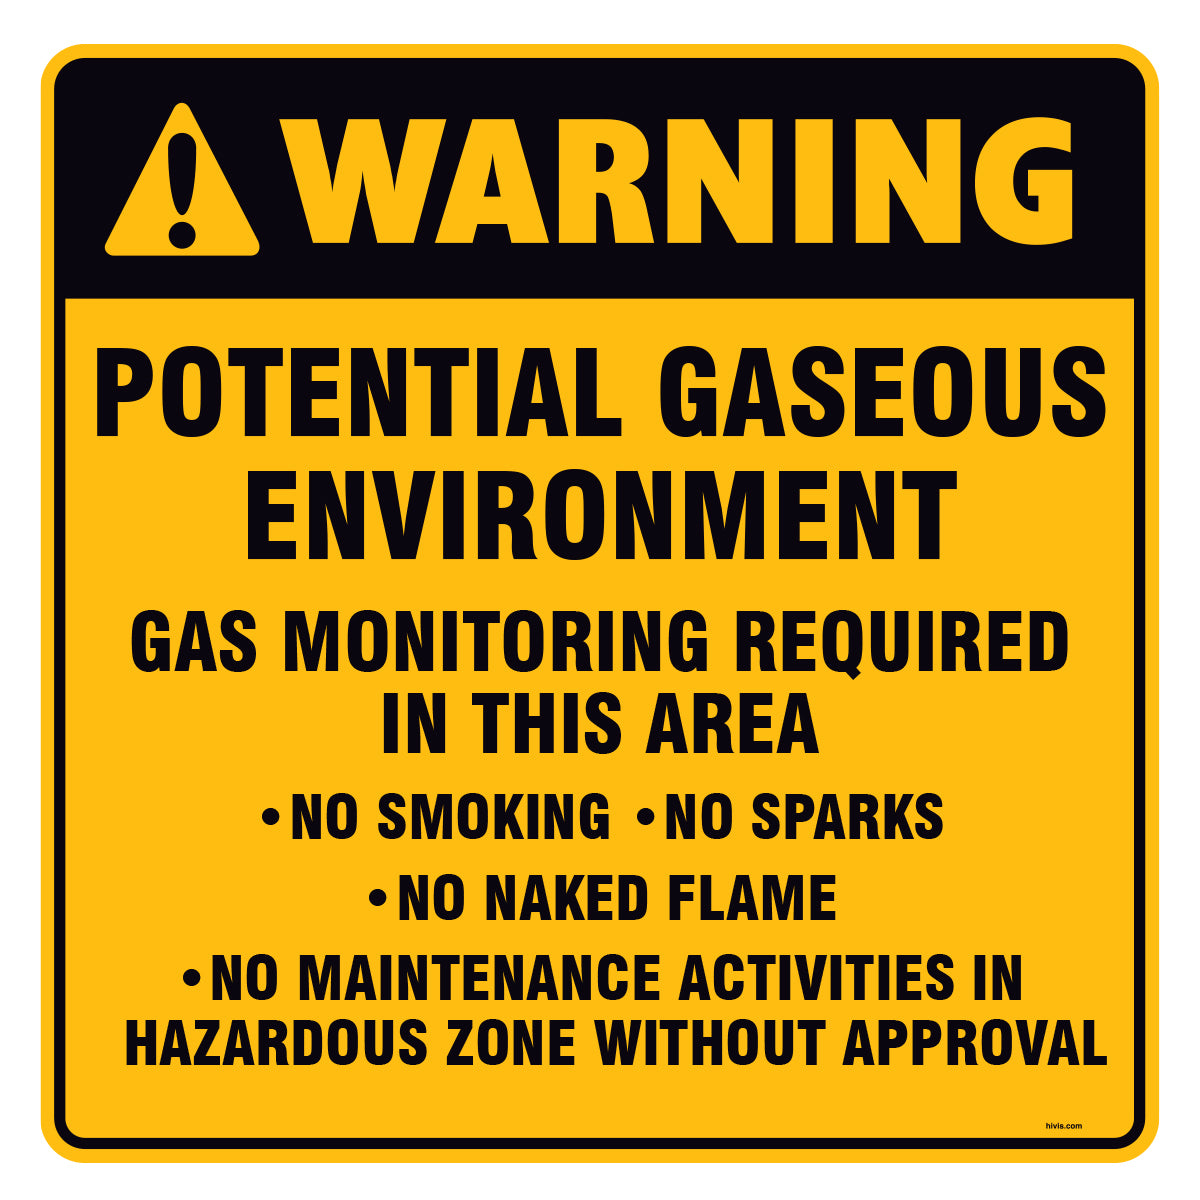 Underground Warning Signs - Mining